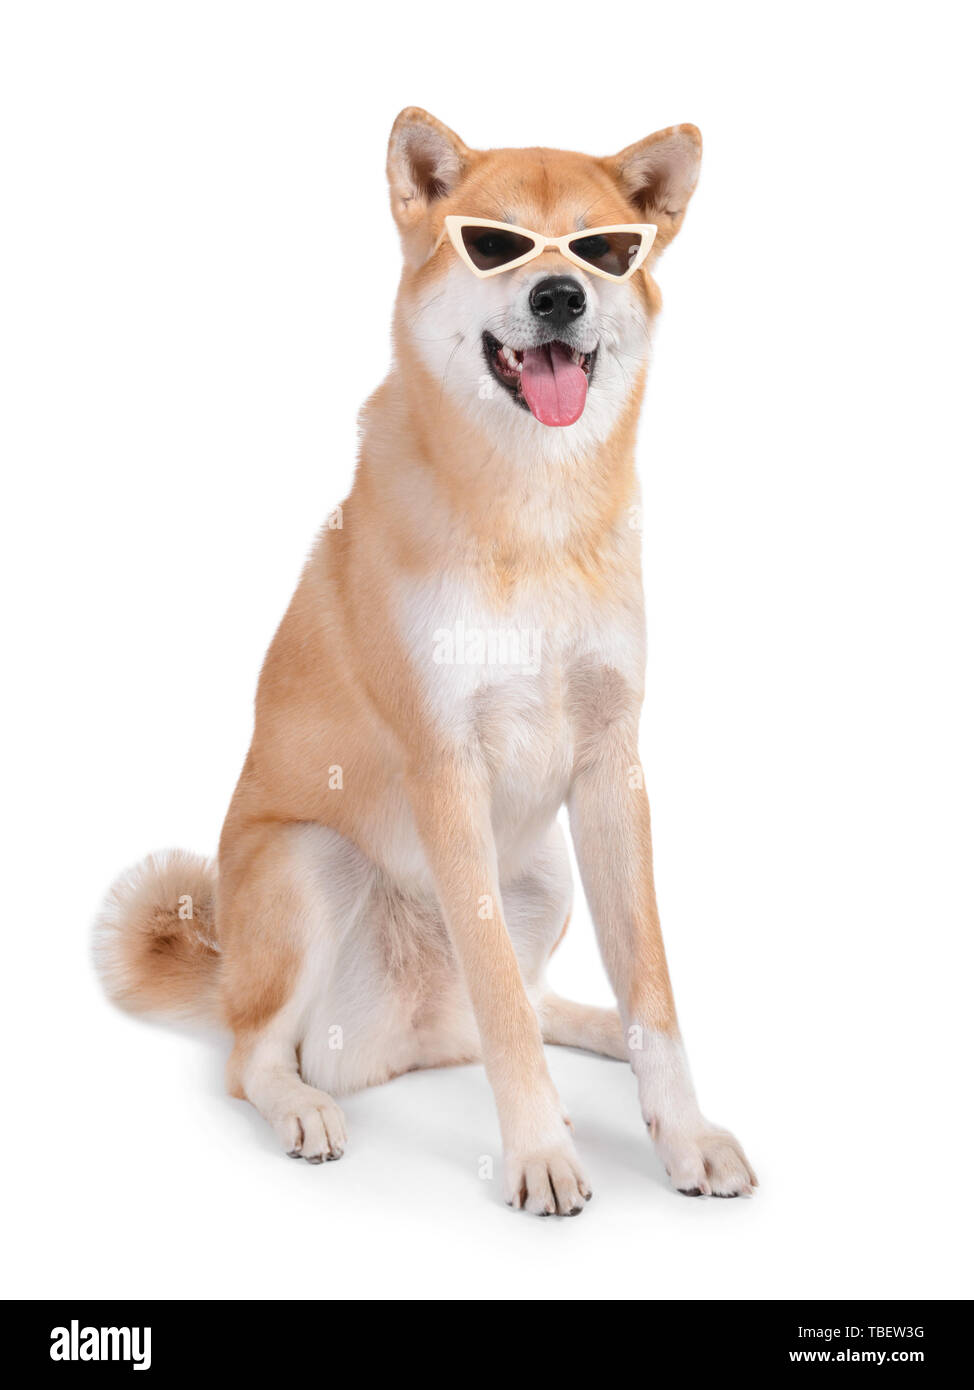 Cute Akita Inu dog with sunglasses on white background Stock Photo